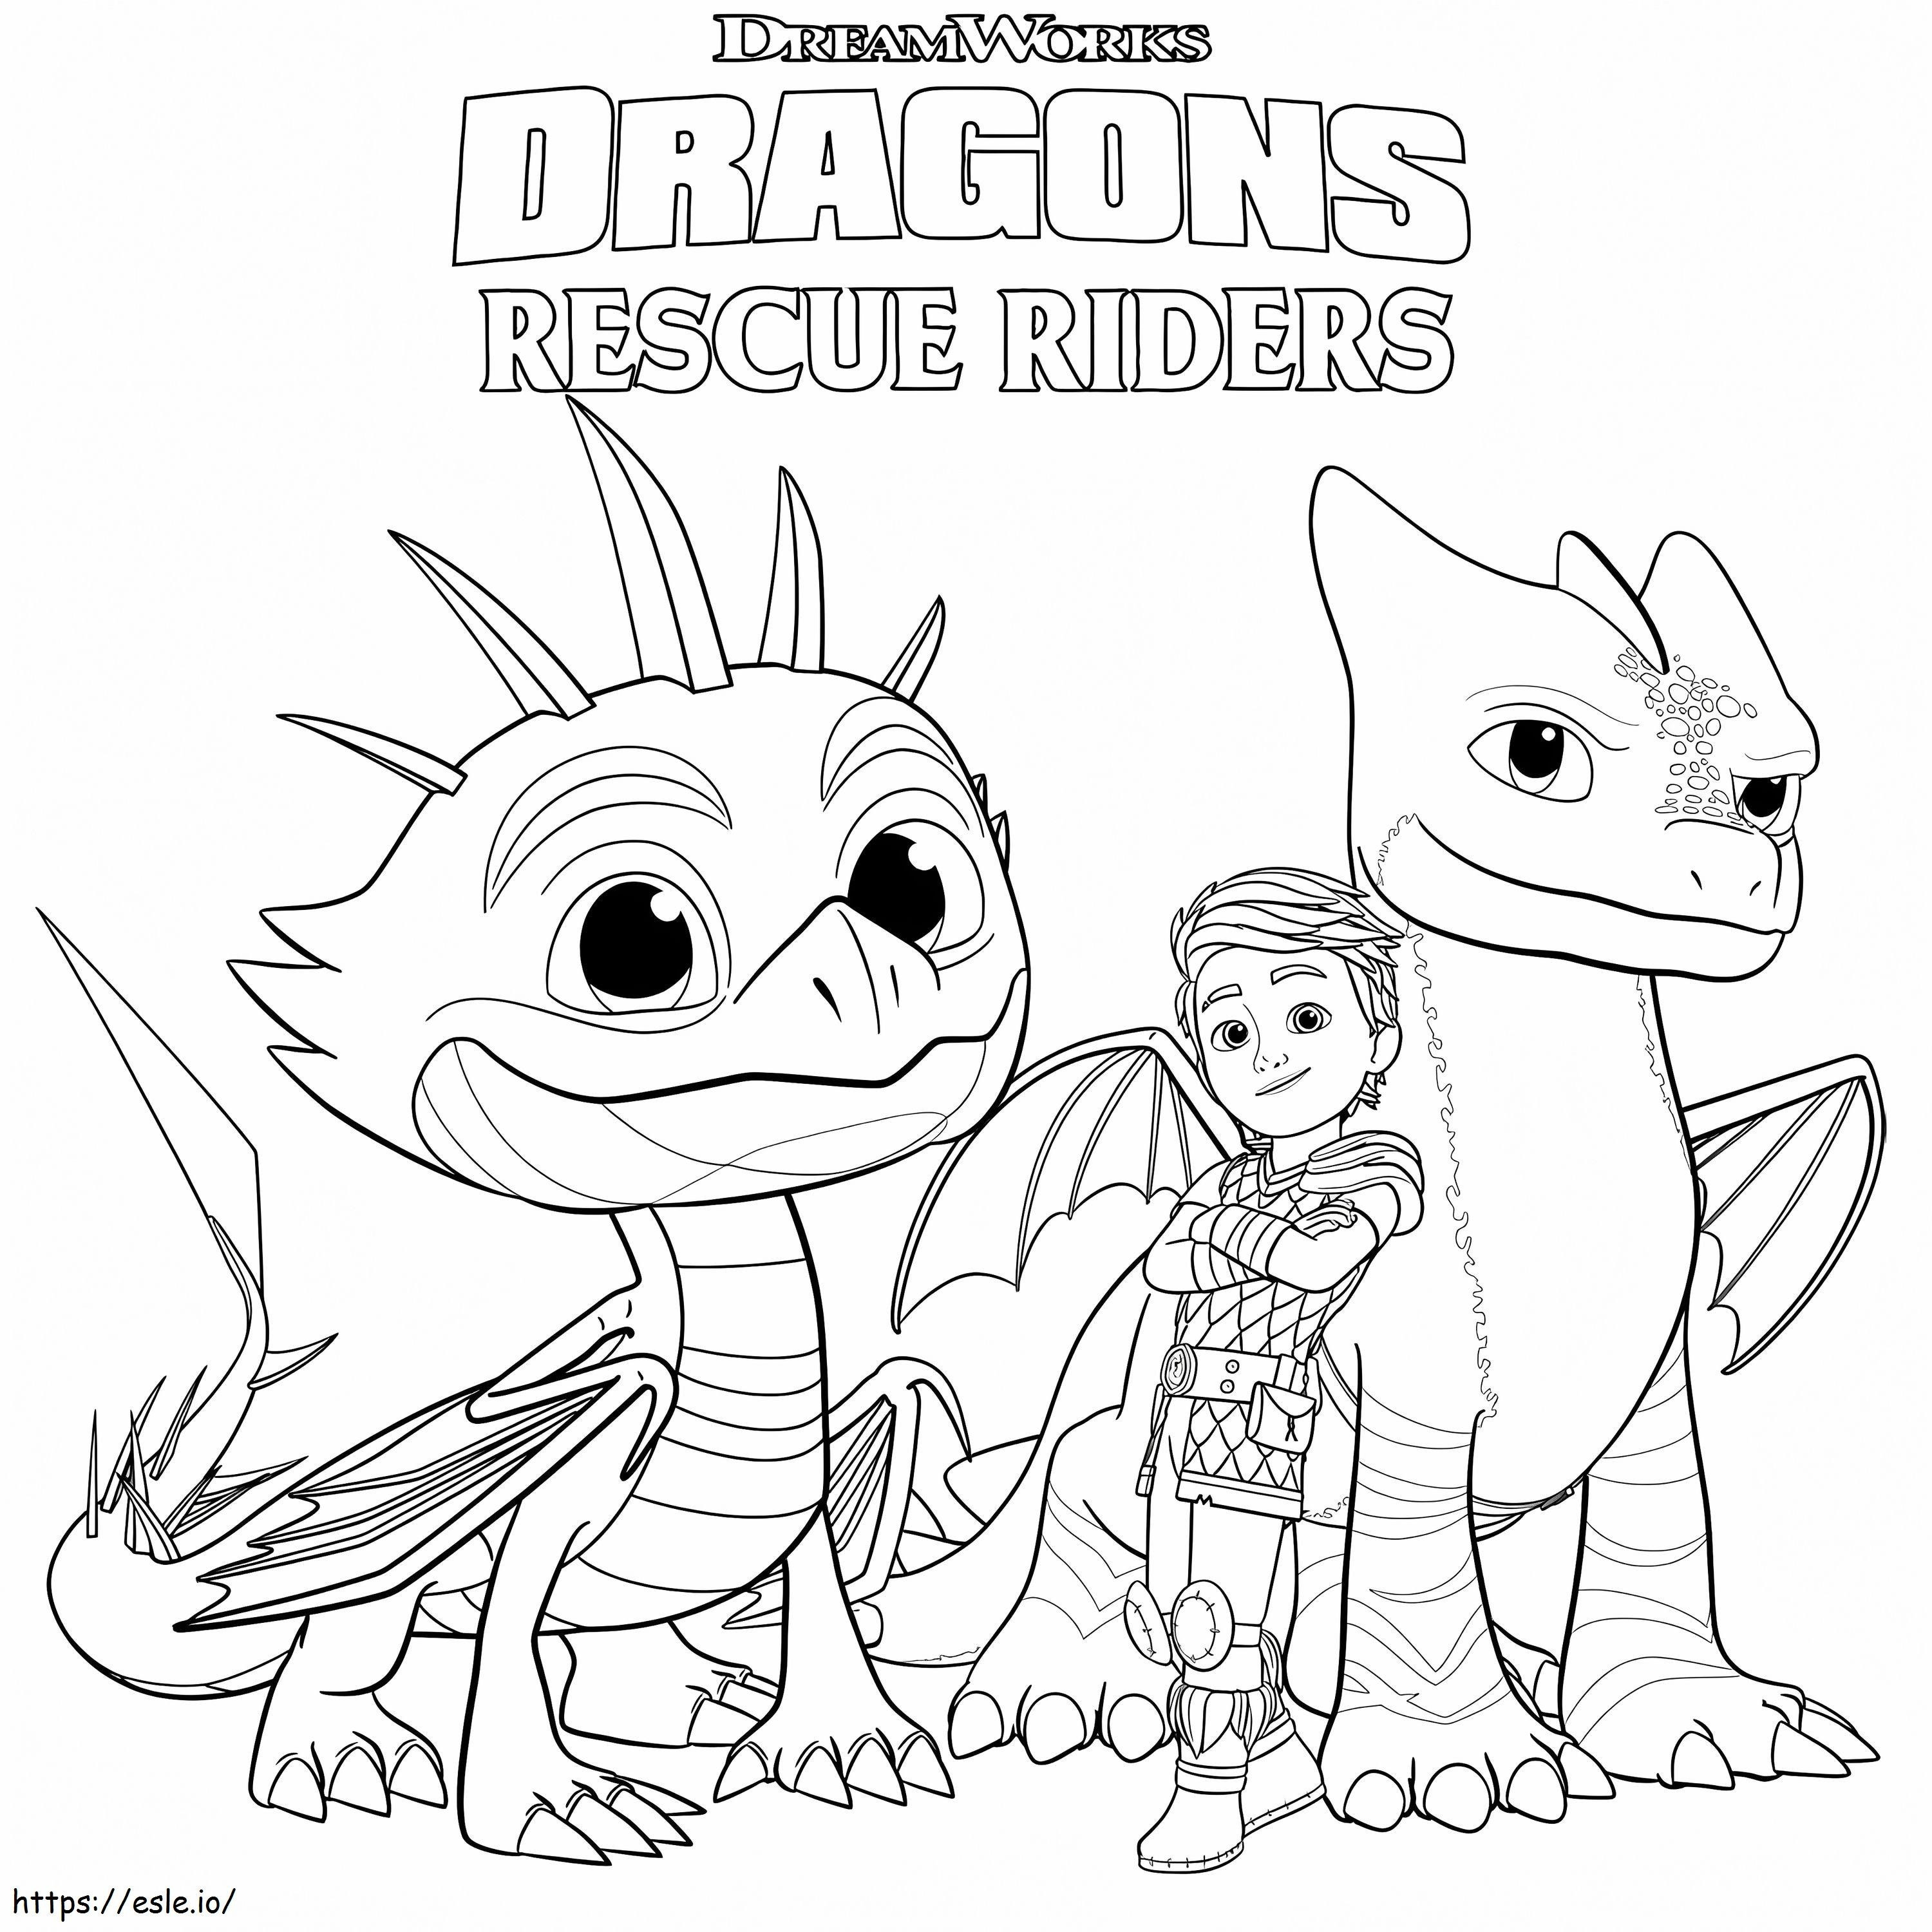 Coloriage Dragons Rescue Riders imprimable à imprimer dessin